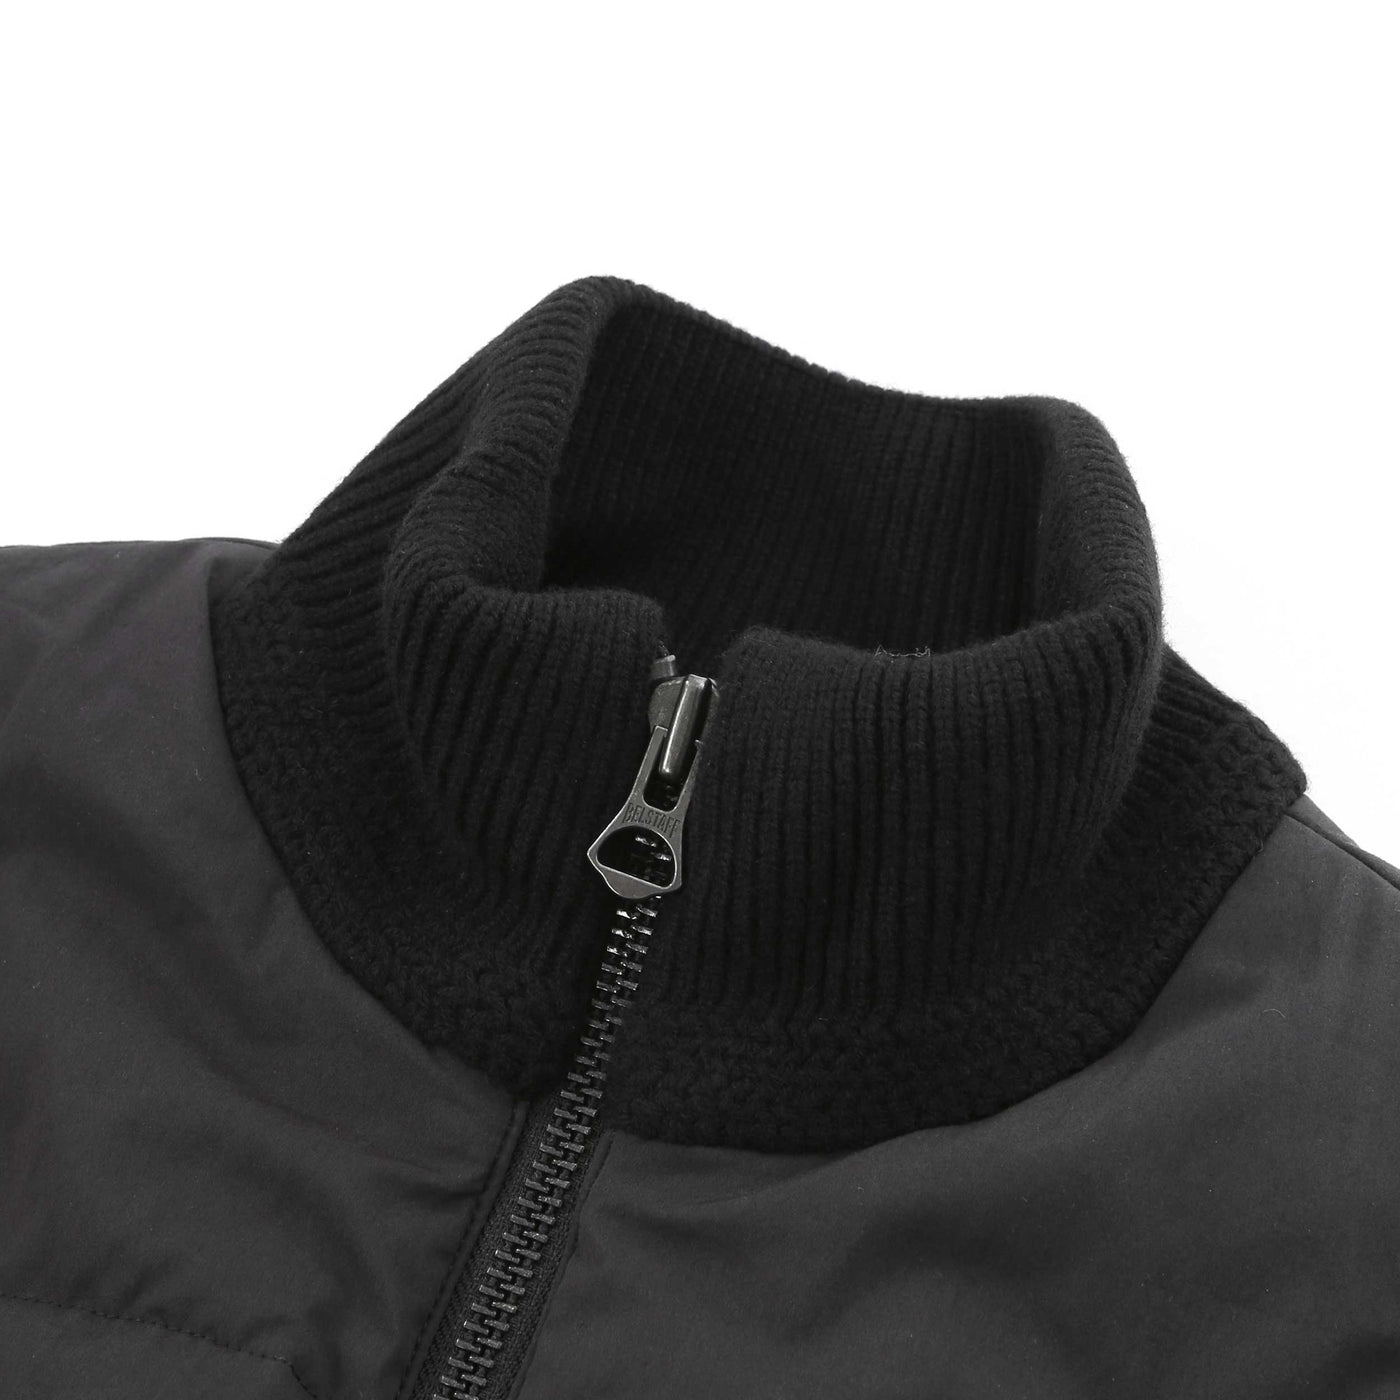 Belstaff Hatfield Jacket in Black Collar